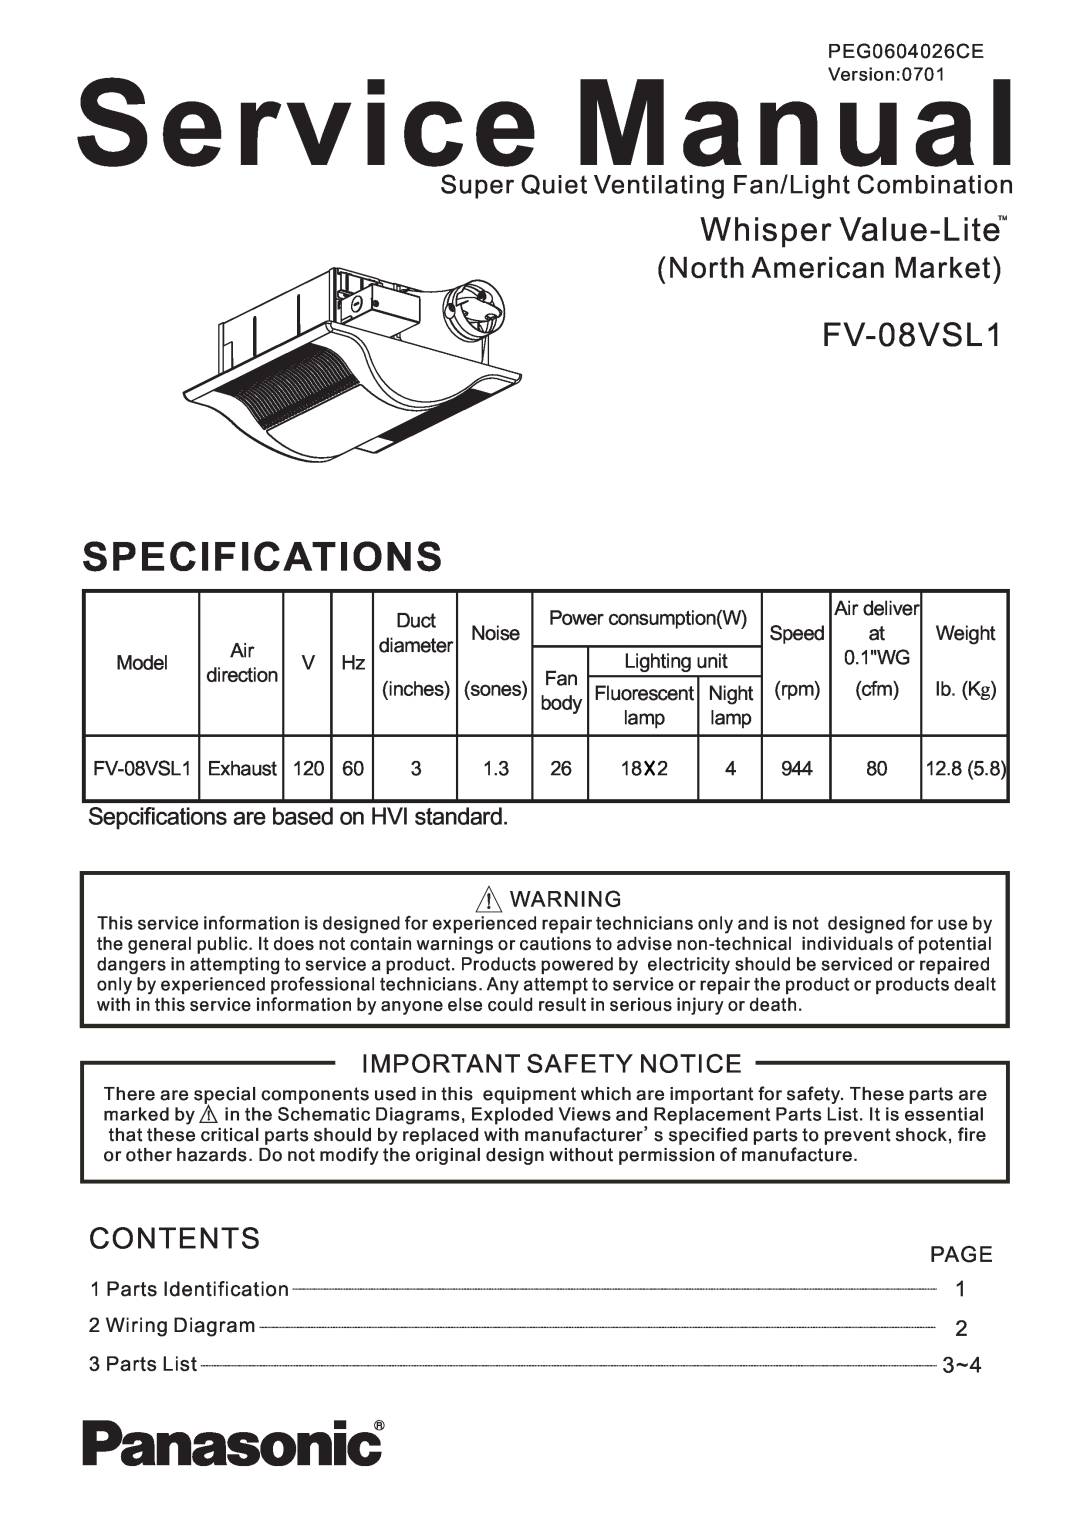 Panasonic FV-08VSL1 service manual Whisper Value-LiteTM, Specifications, North American Market, Contents 